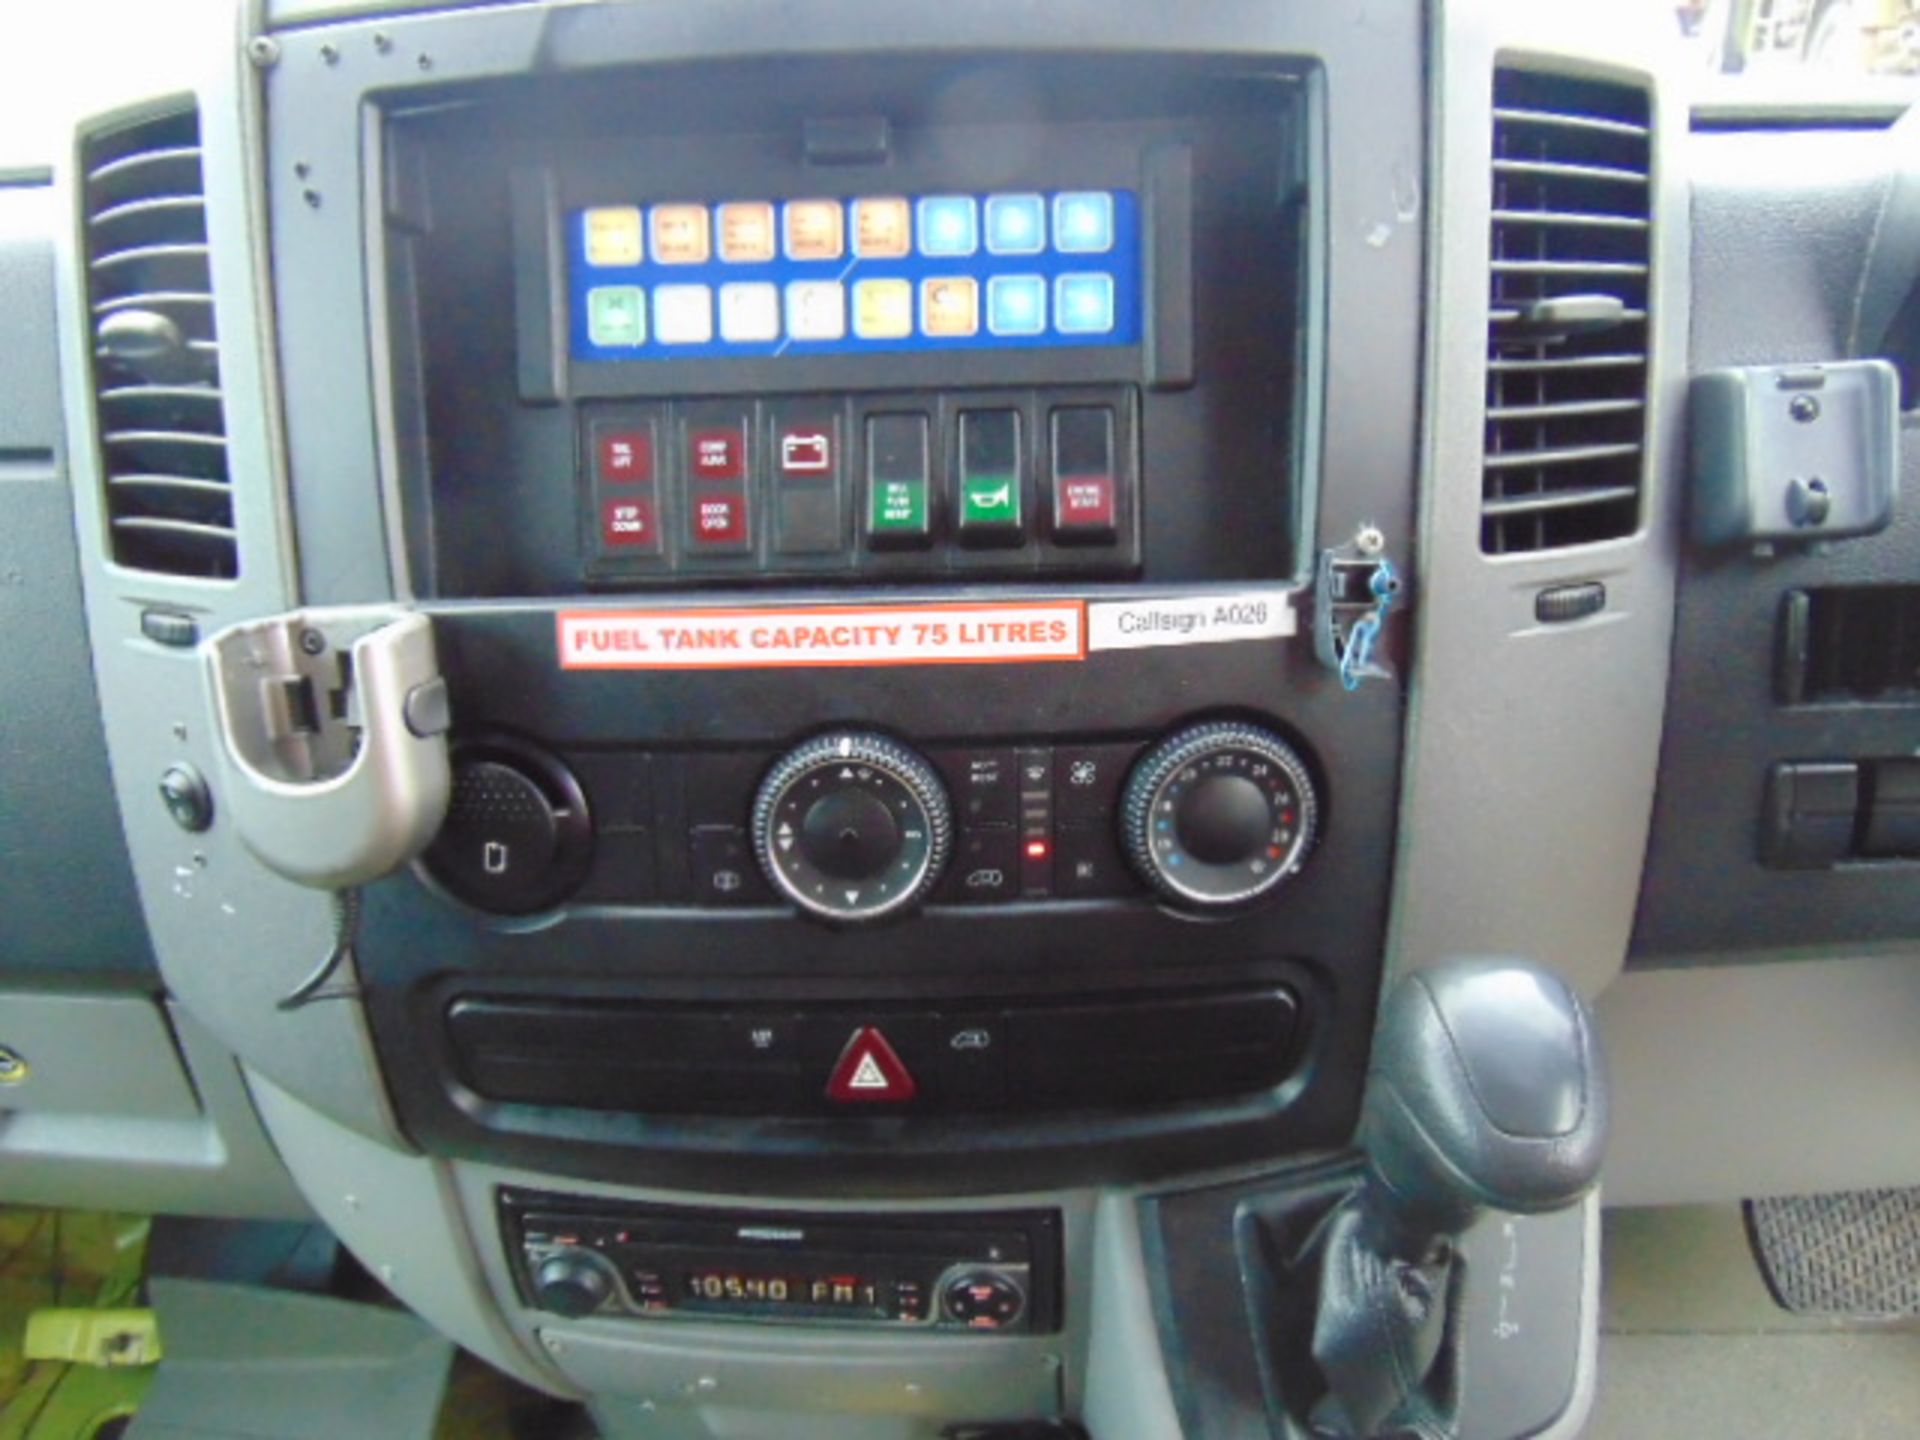 Mercedes Sprinter 515 CDI Turbo diesel ambulance - Image 9 of 16